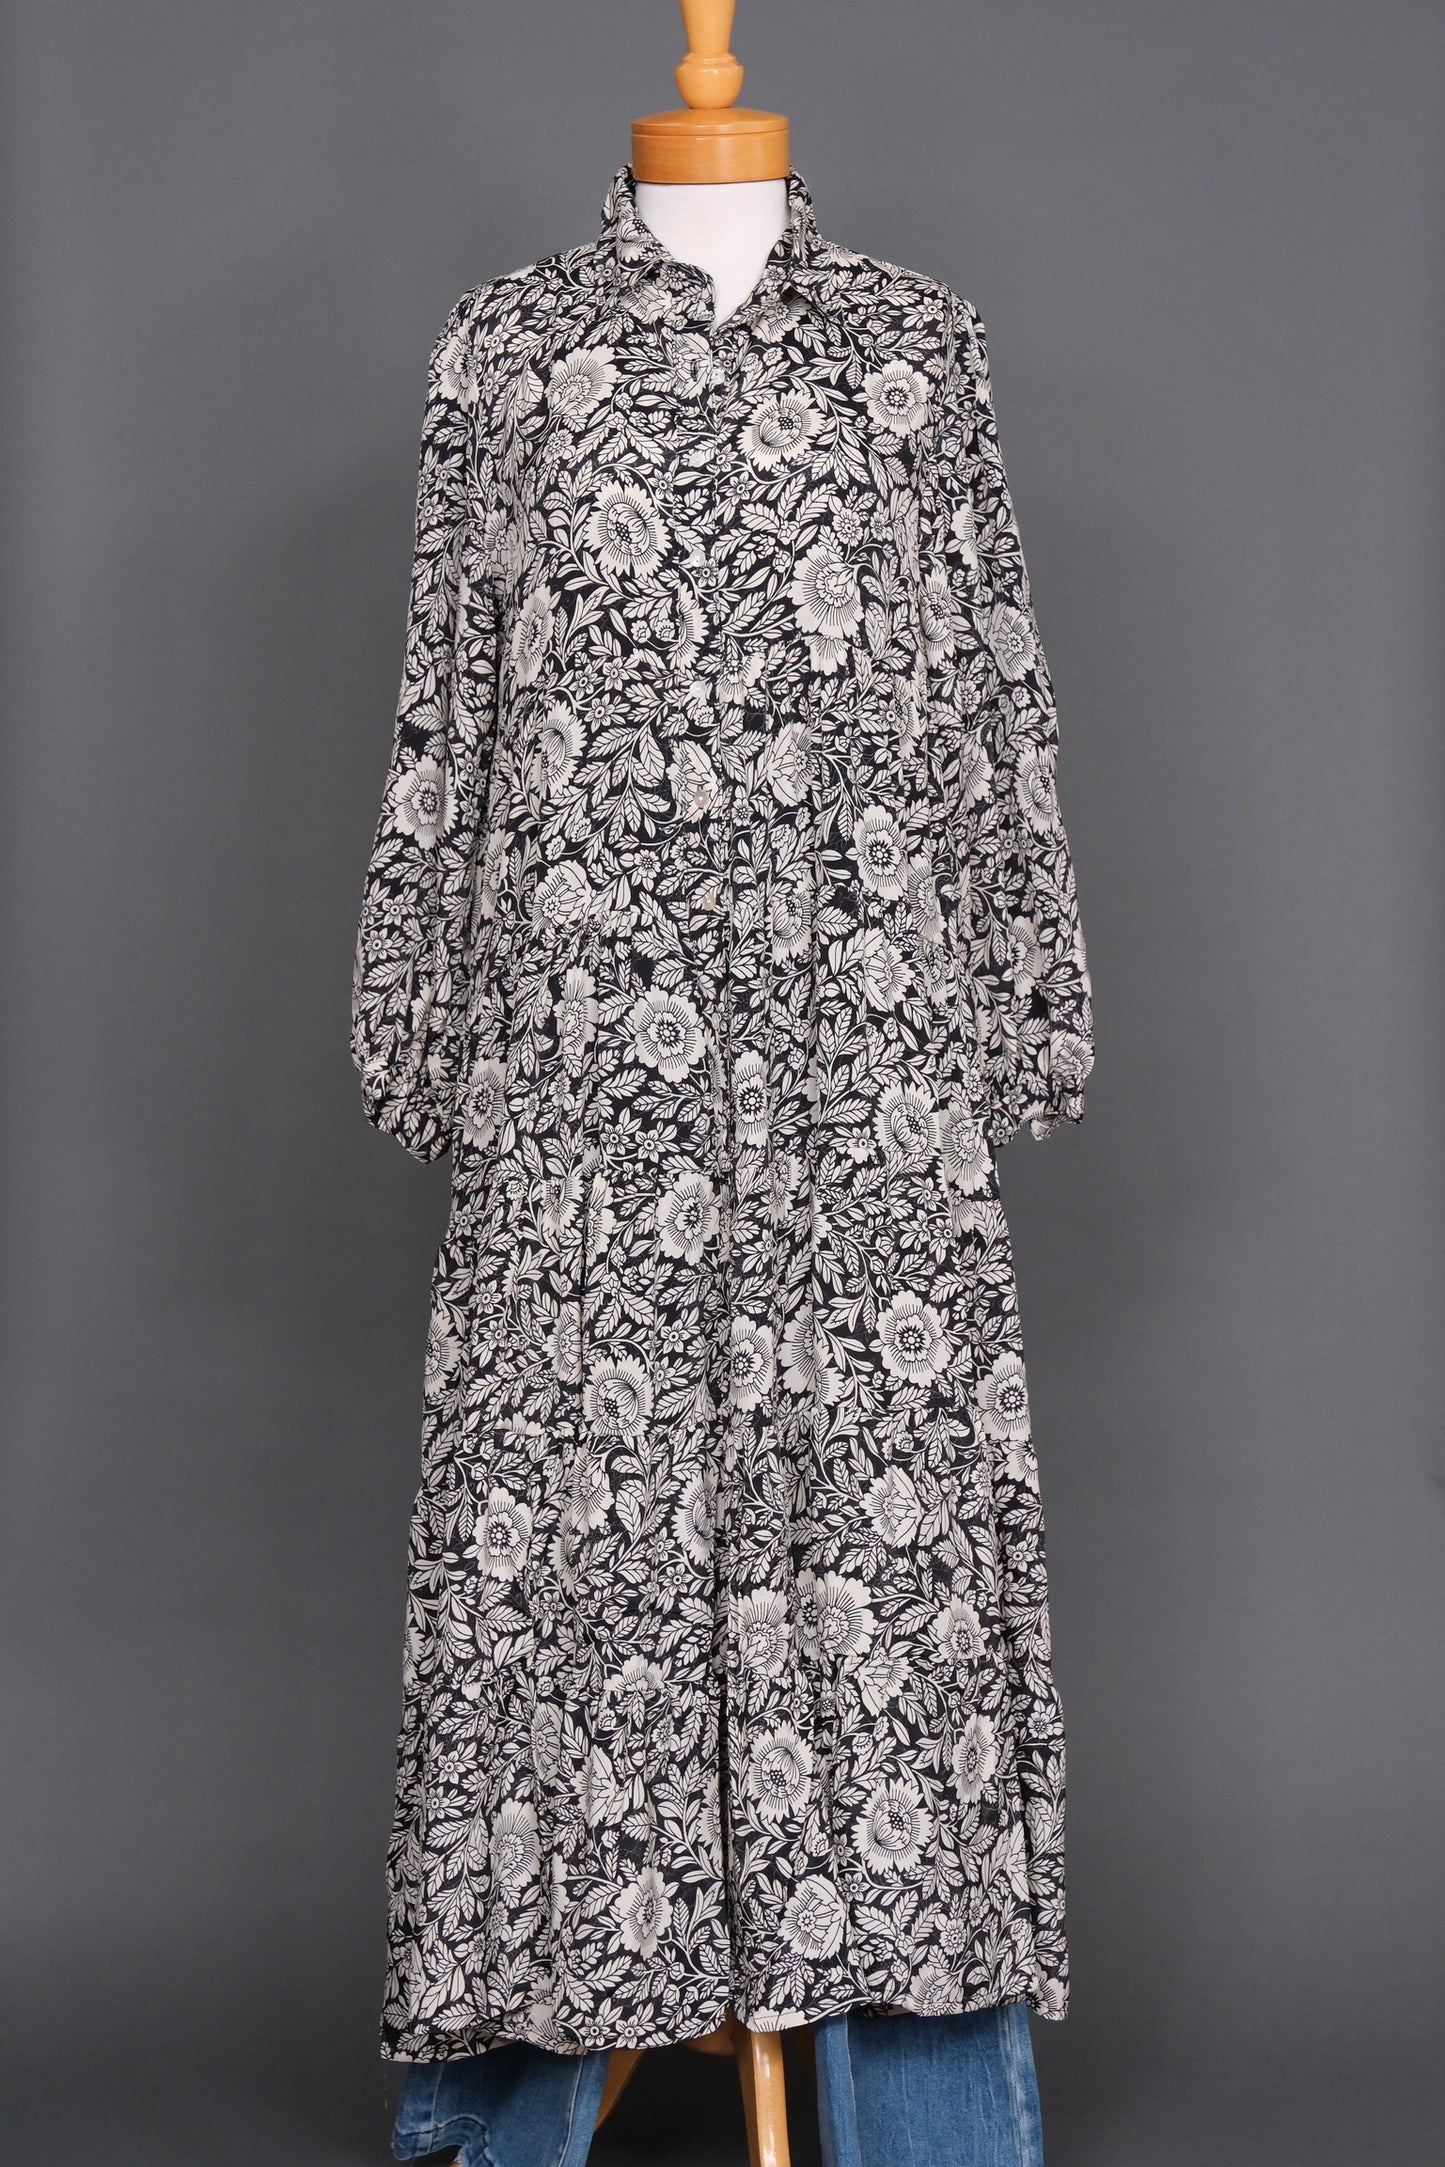 The Tate Dress in Ebony & Ivory